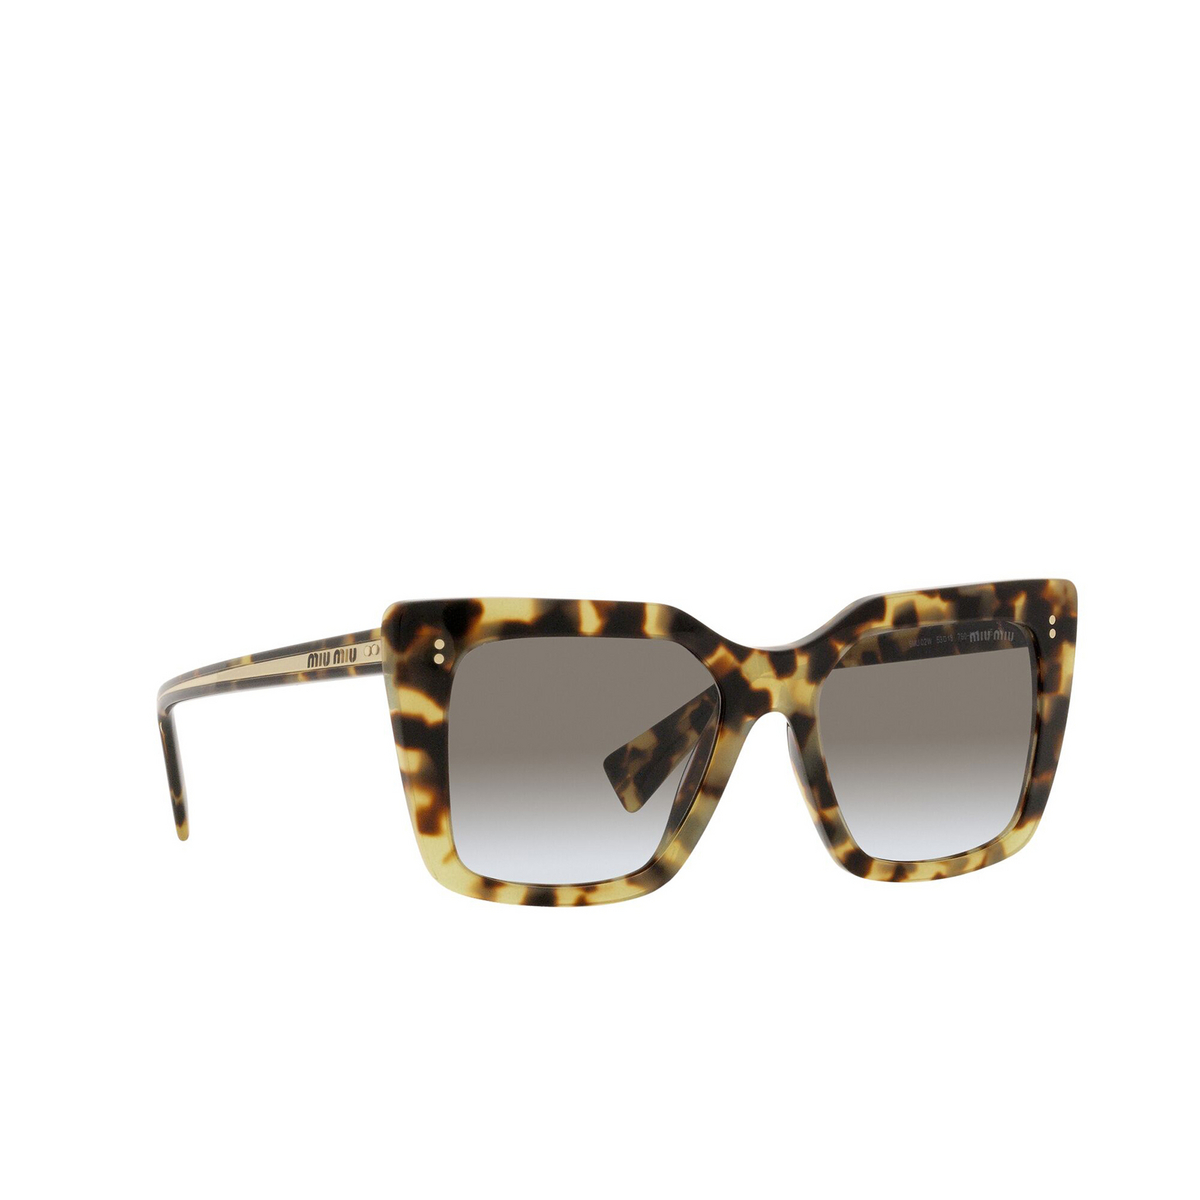 Miu Miu® Square Sunglasses: MU 02WS color Light Havana 7S00A7 - three-quarters view.